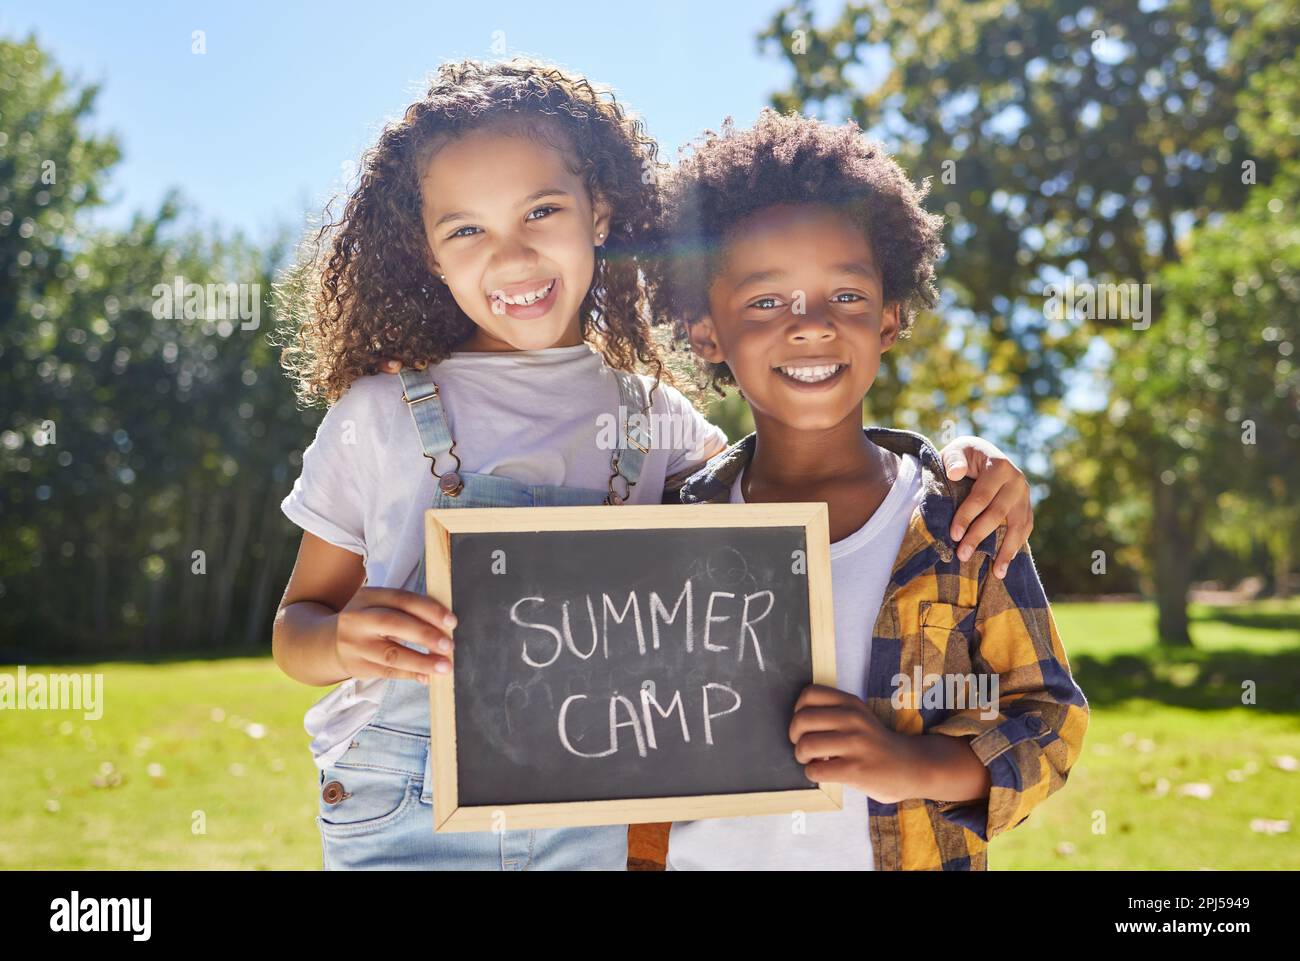 Summer camp sign, portrait or happy kids hug in park together for fun ...